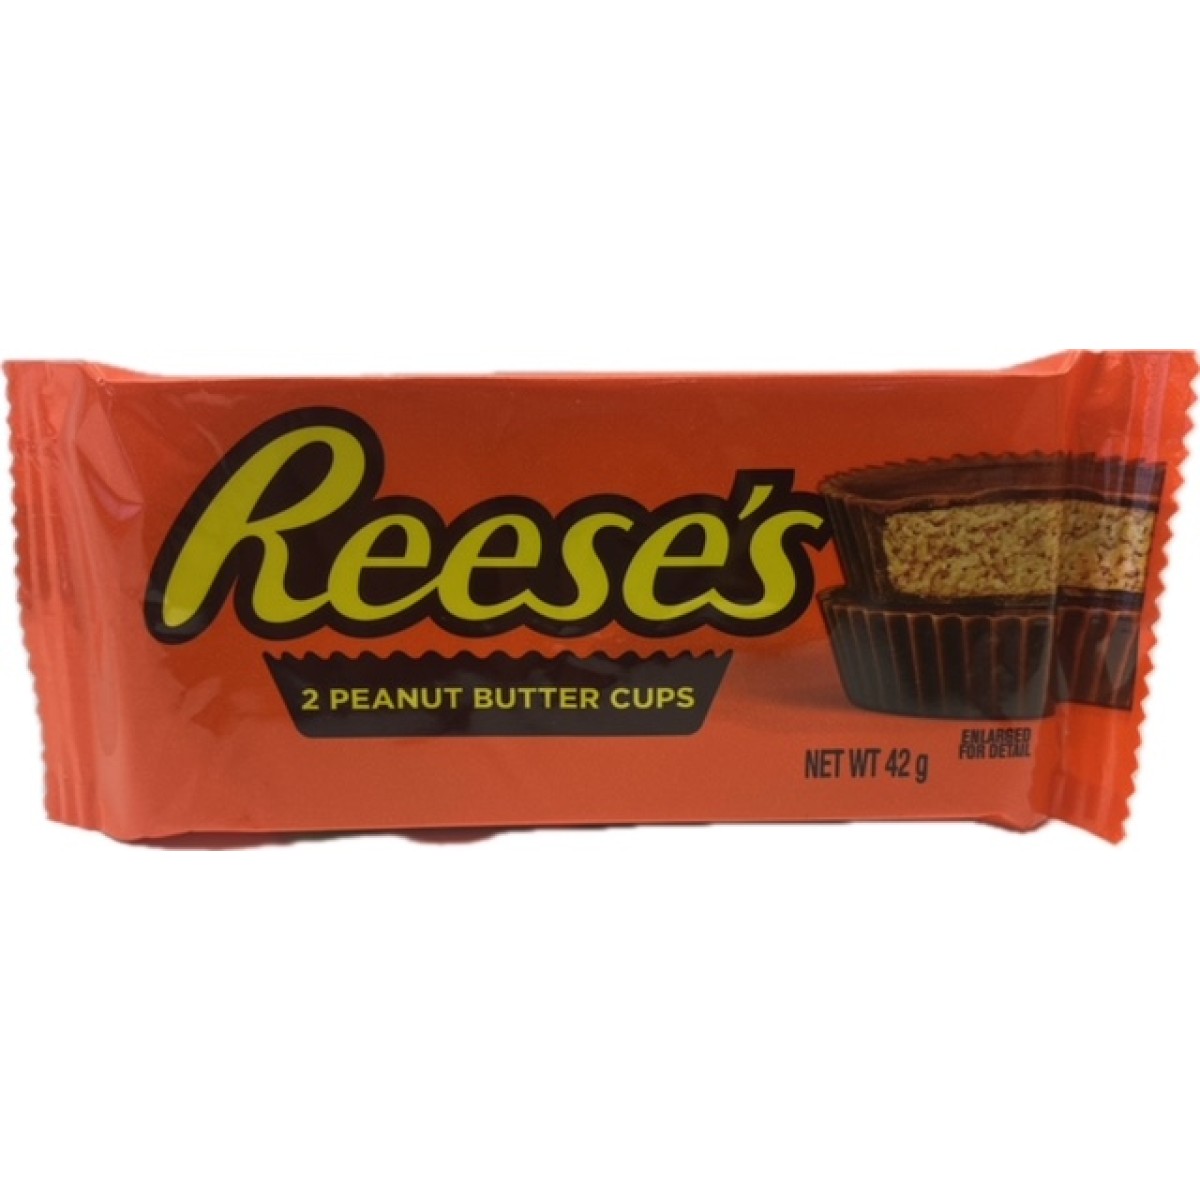 reese's 2 peanut butter cups 42gr